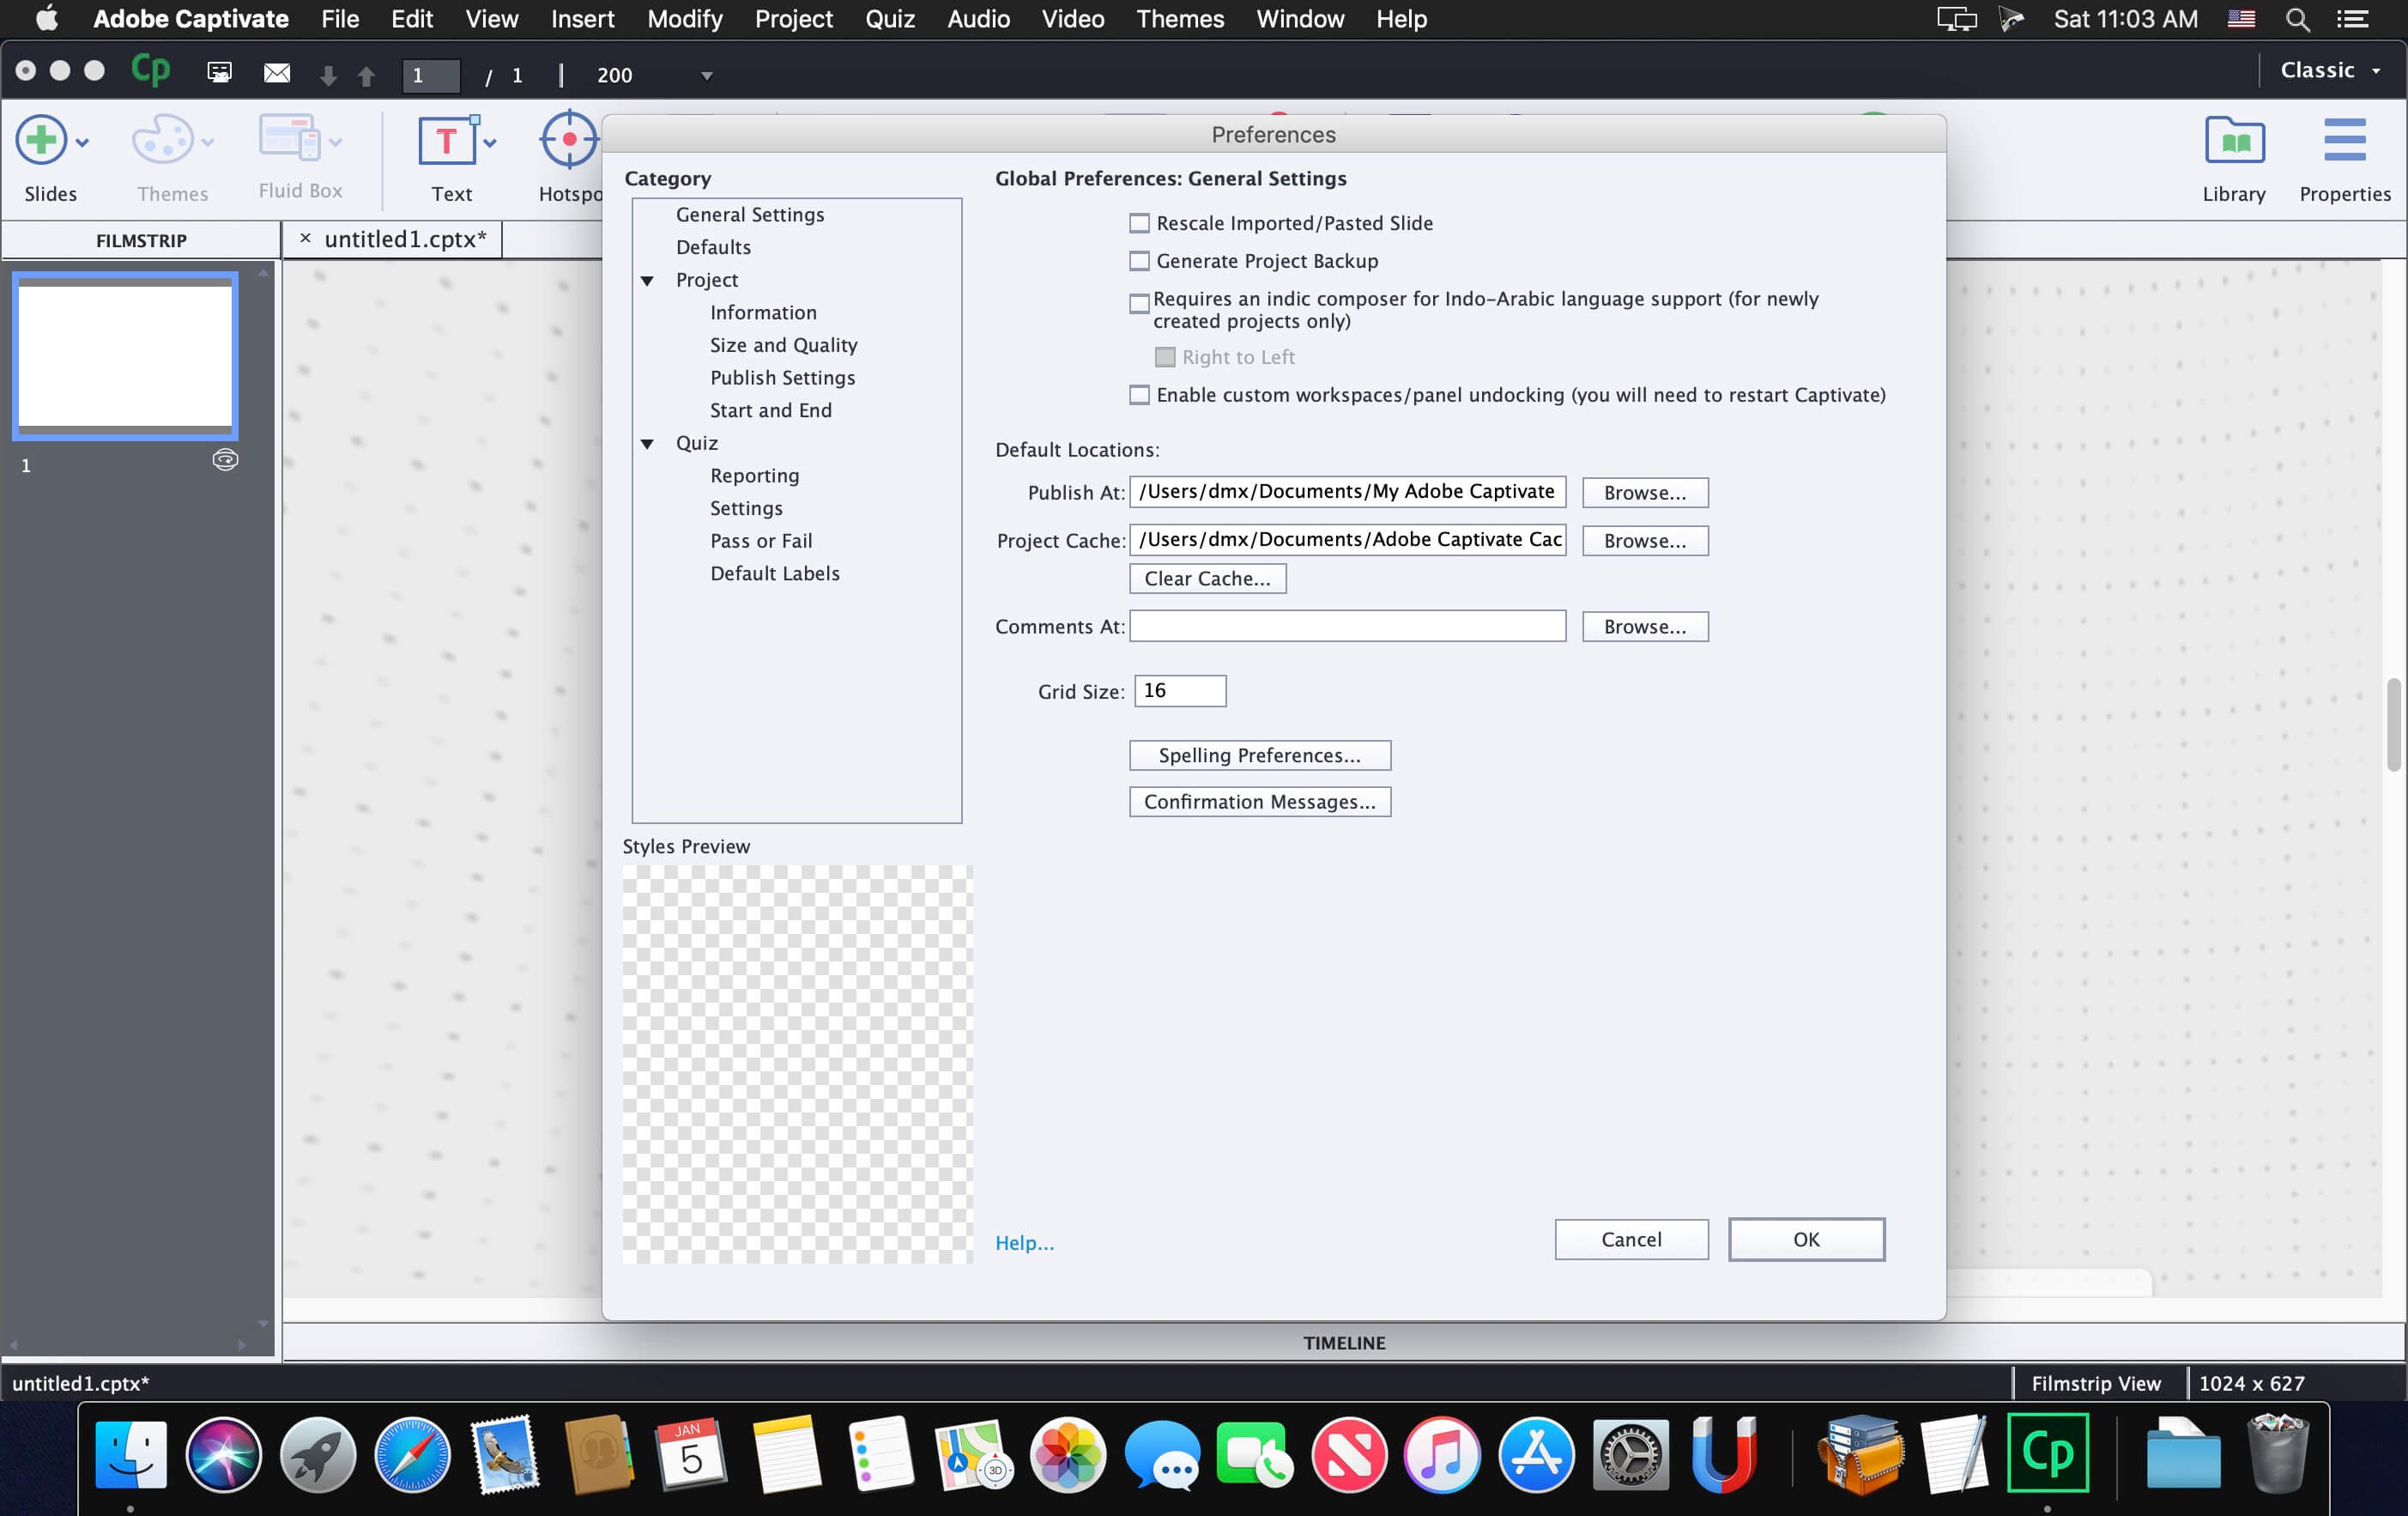 Adobe Captivate 2019 (macOS) keyboard shortcuts ‒ defkey